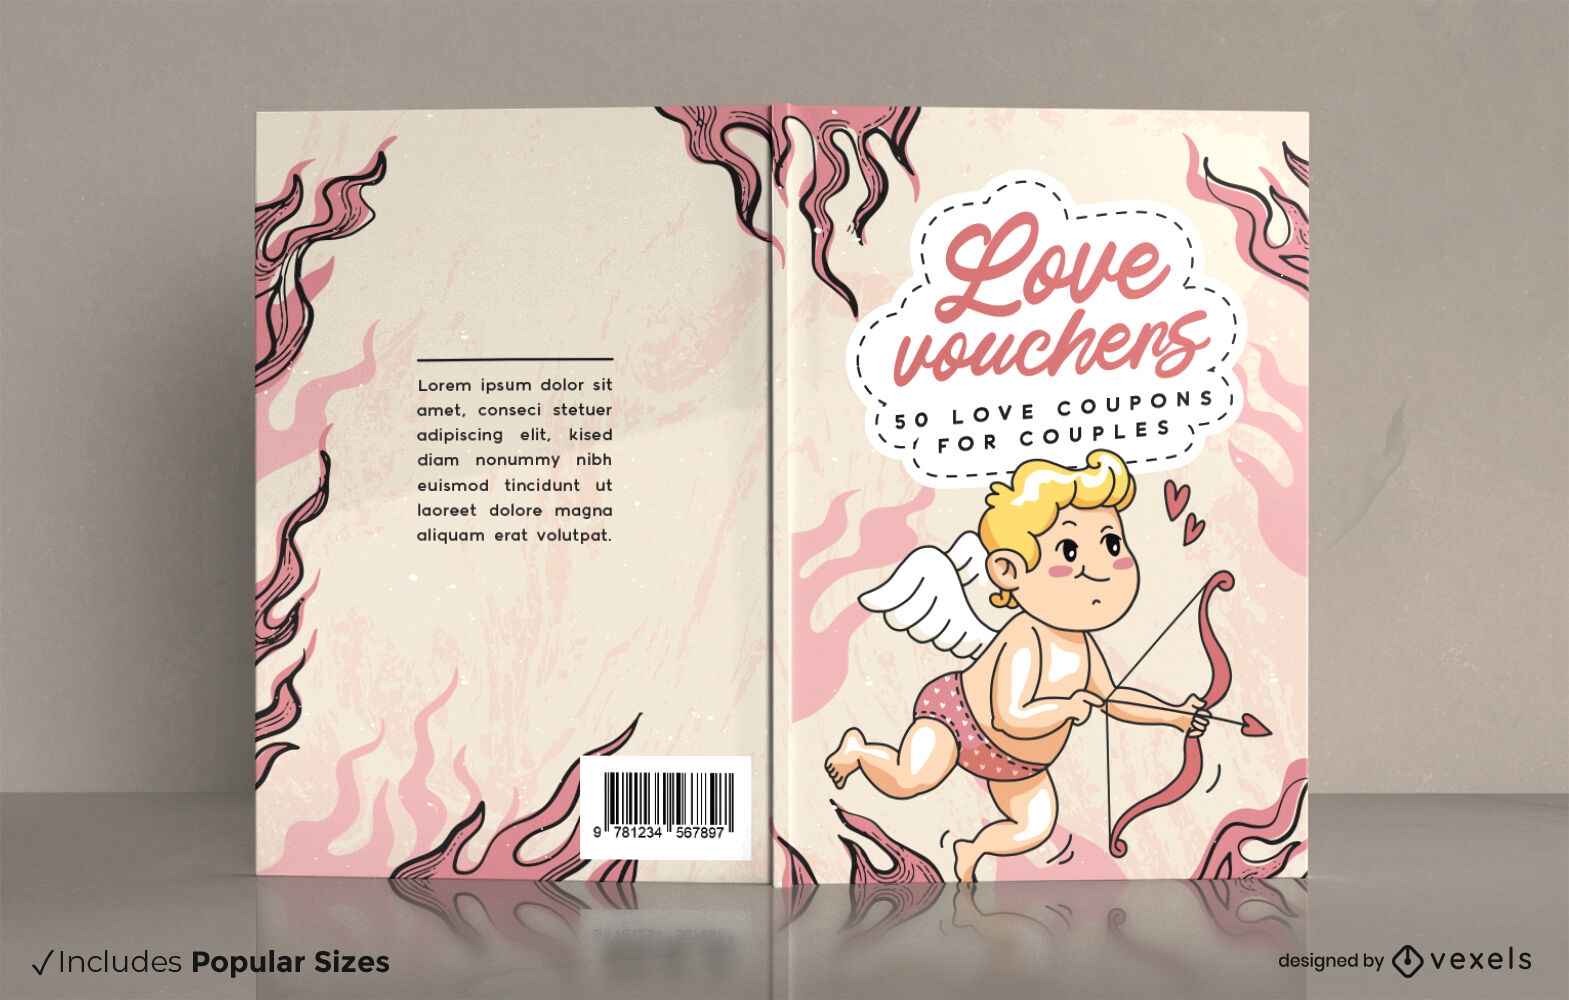 Love vouchers Valentine's Day book cover design